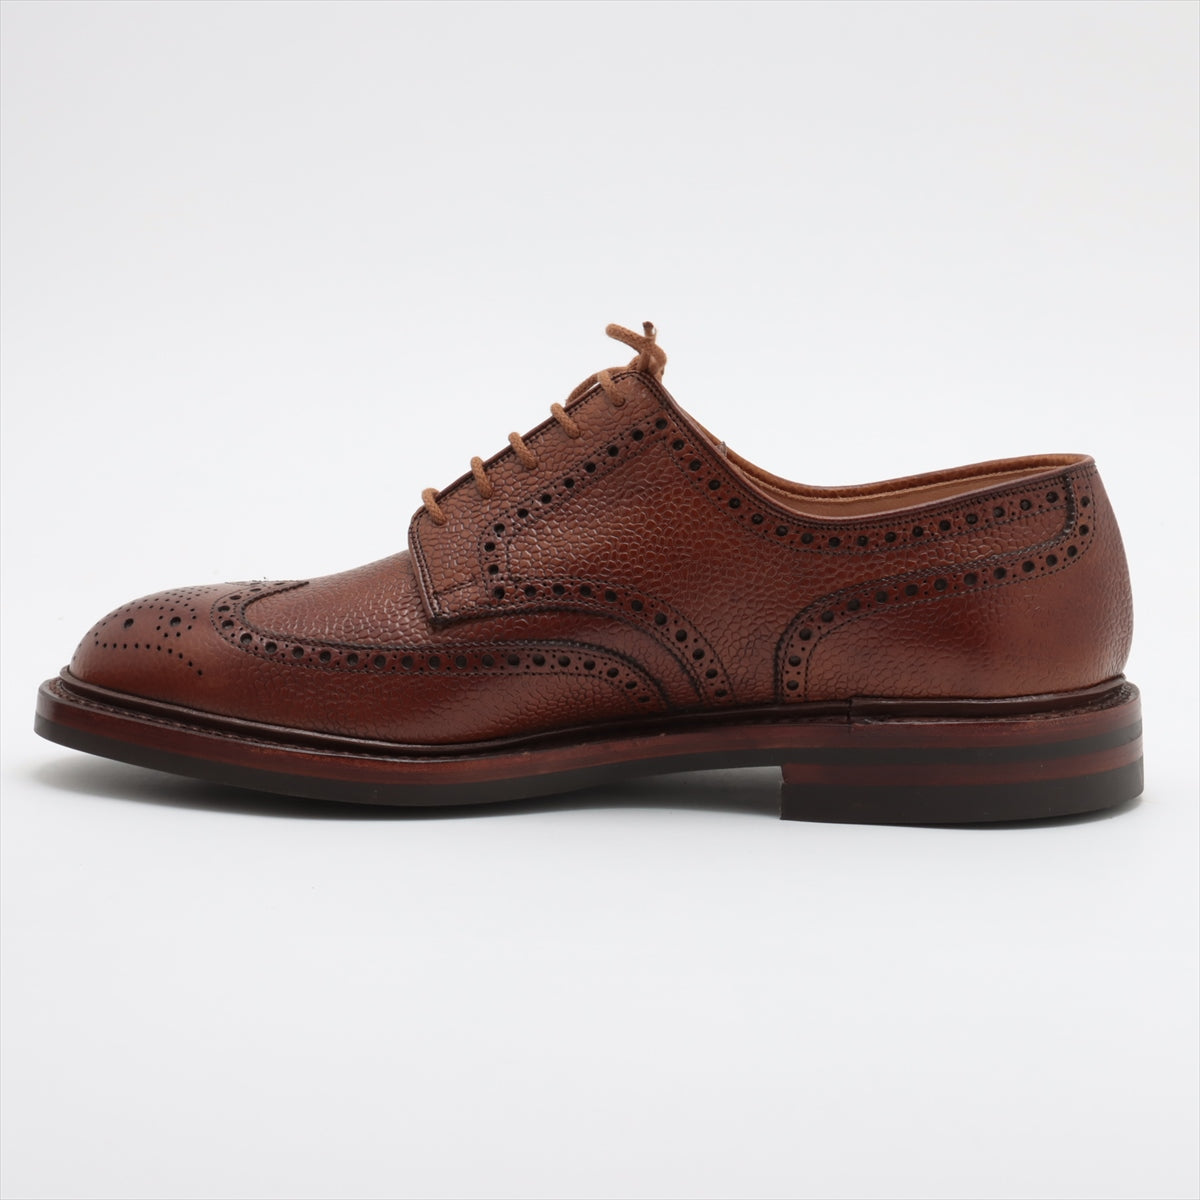 Crockett & Jones Leather Leather shoes 9E Men's Brown PEMBROKE2 wingtip